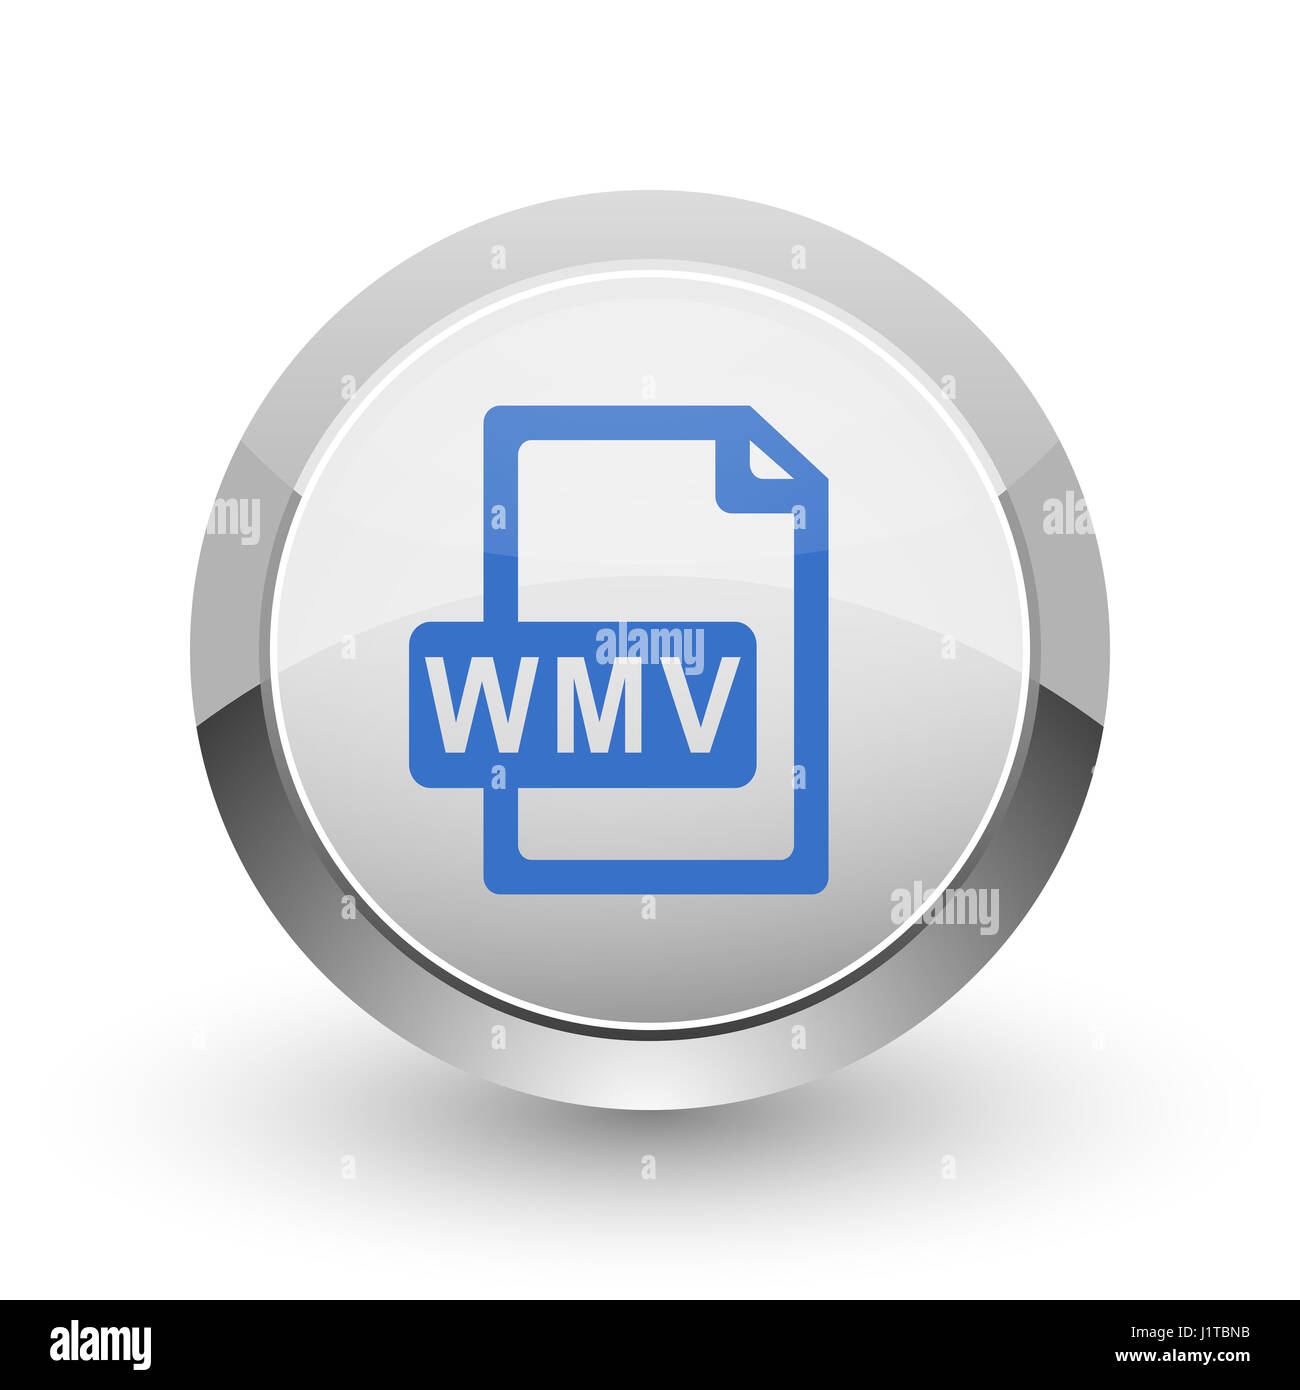 Wmv file fotografías e imágenes de alta resolución - Alamy